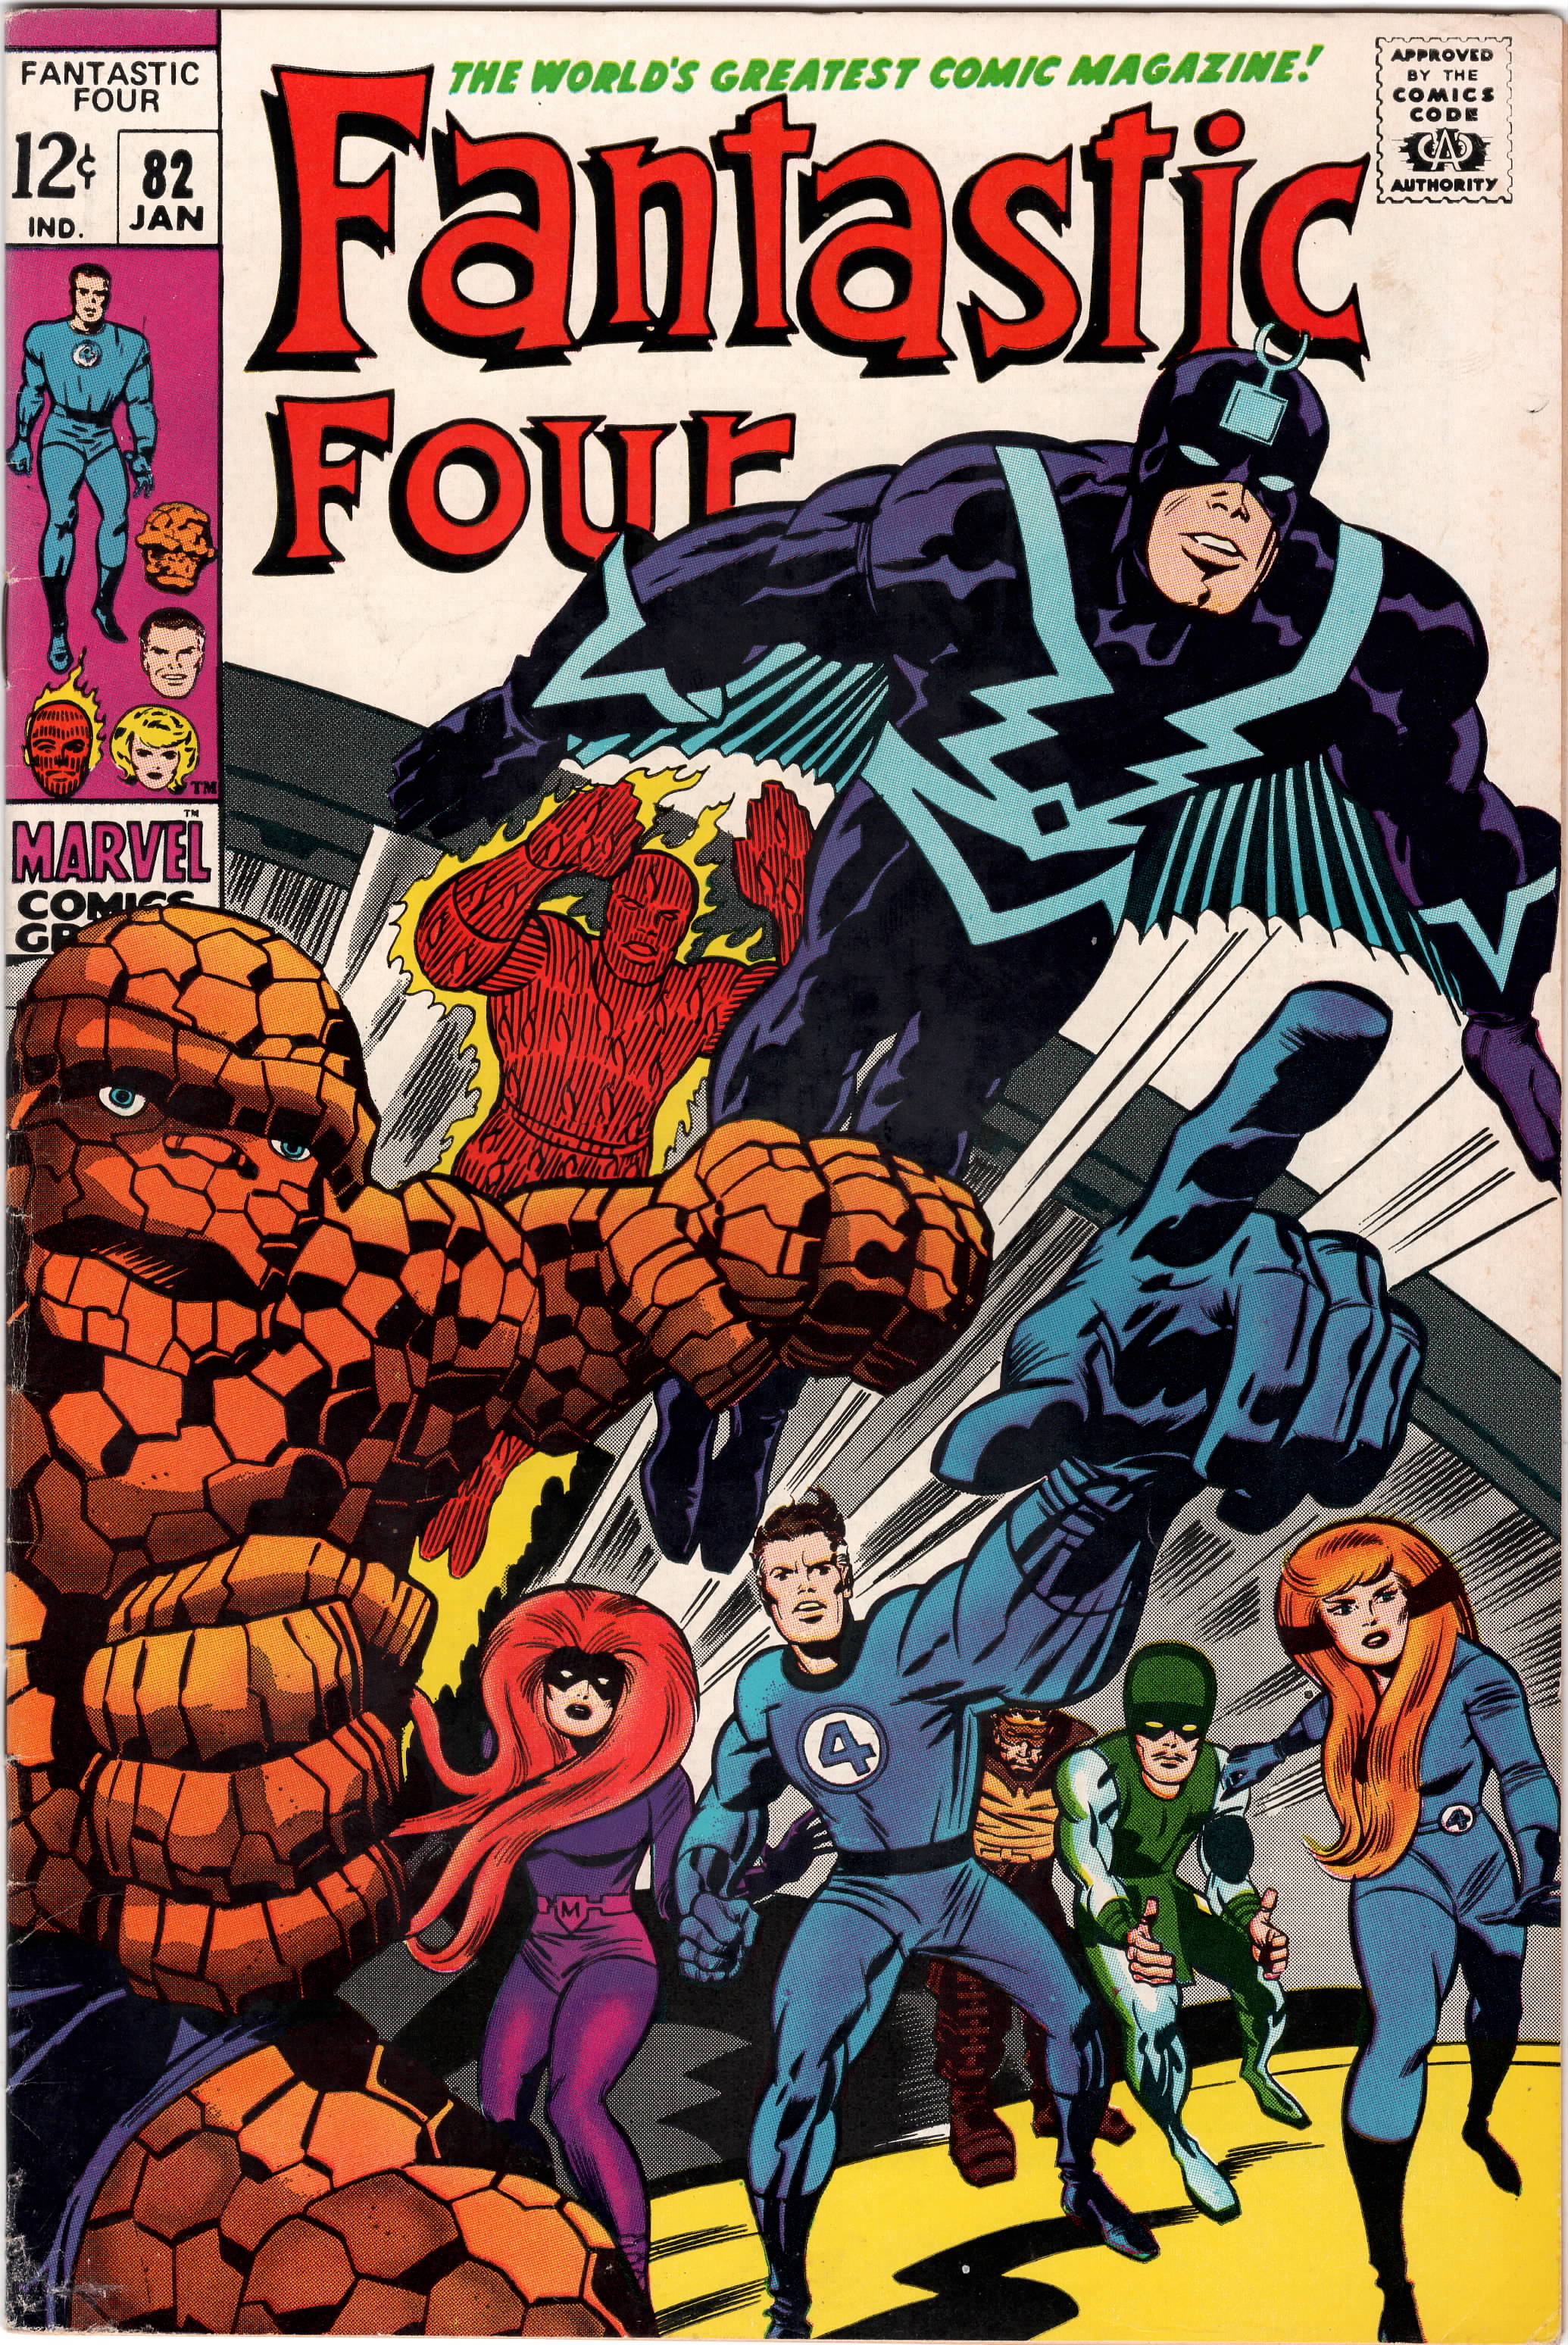 Fantastic Four #082